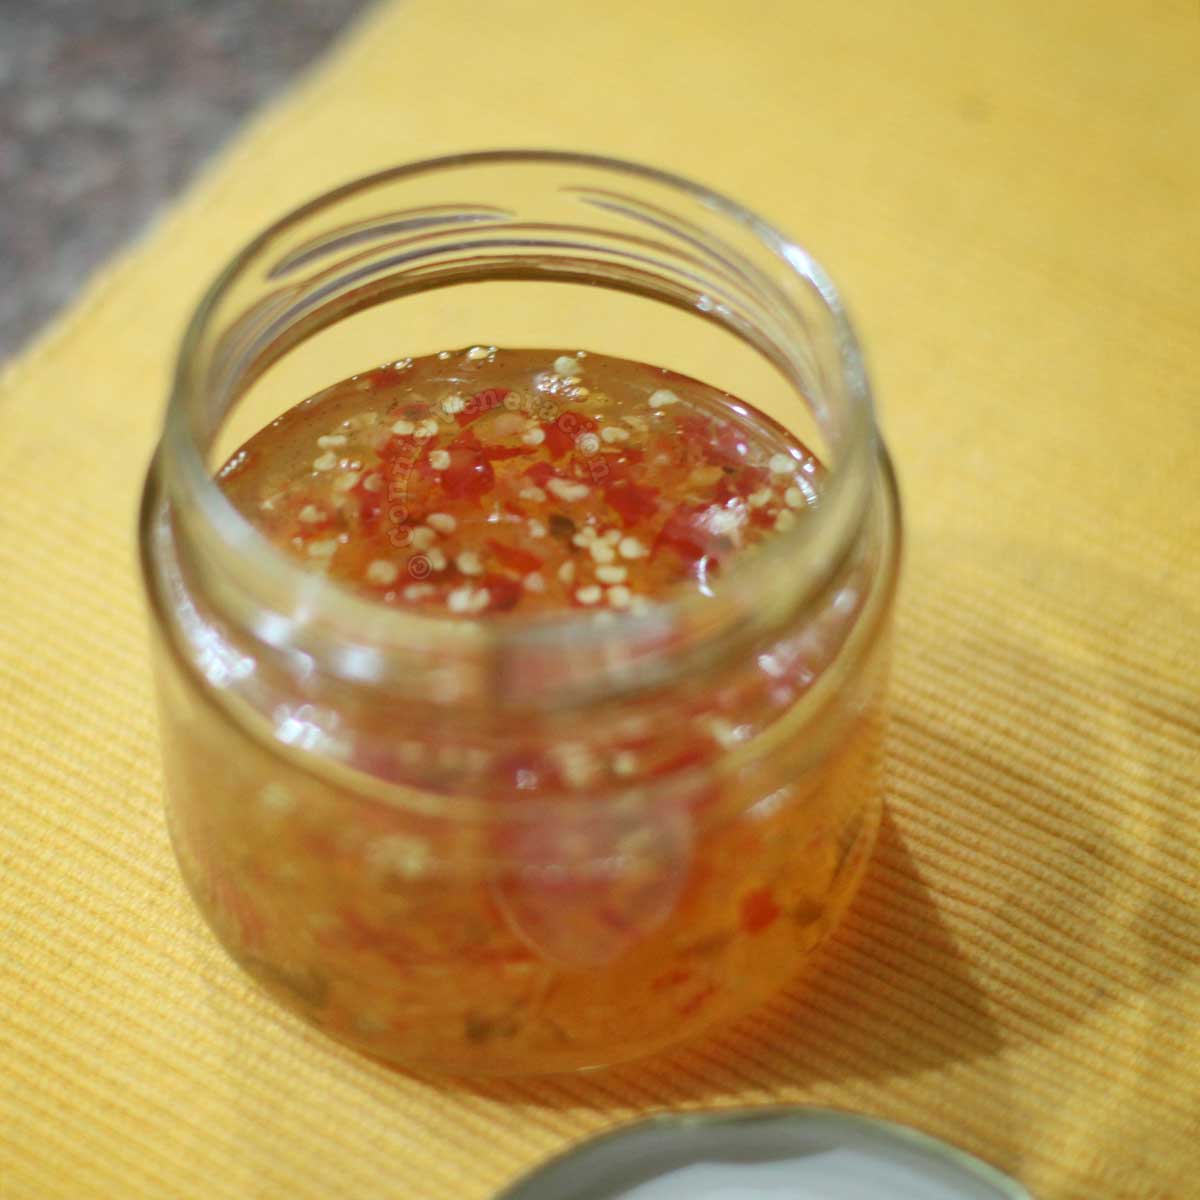 Homecooked sweet chili sauce (no starch)